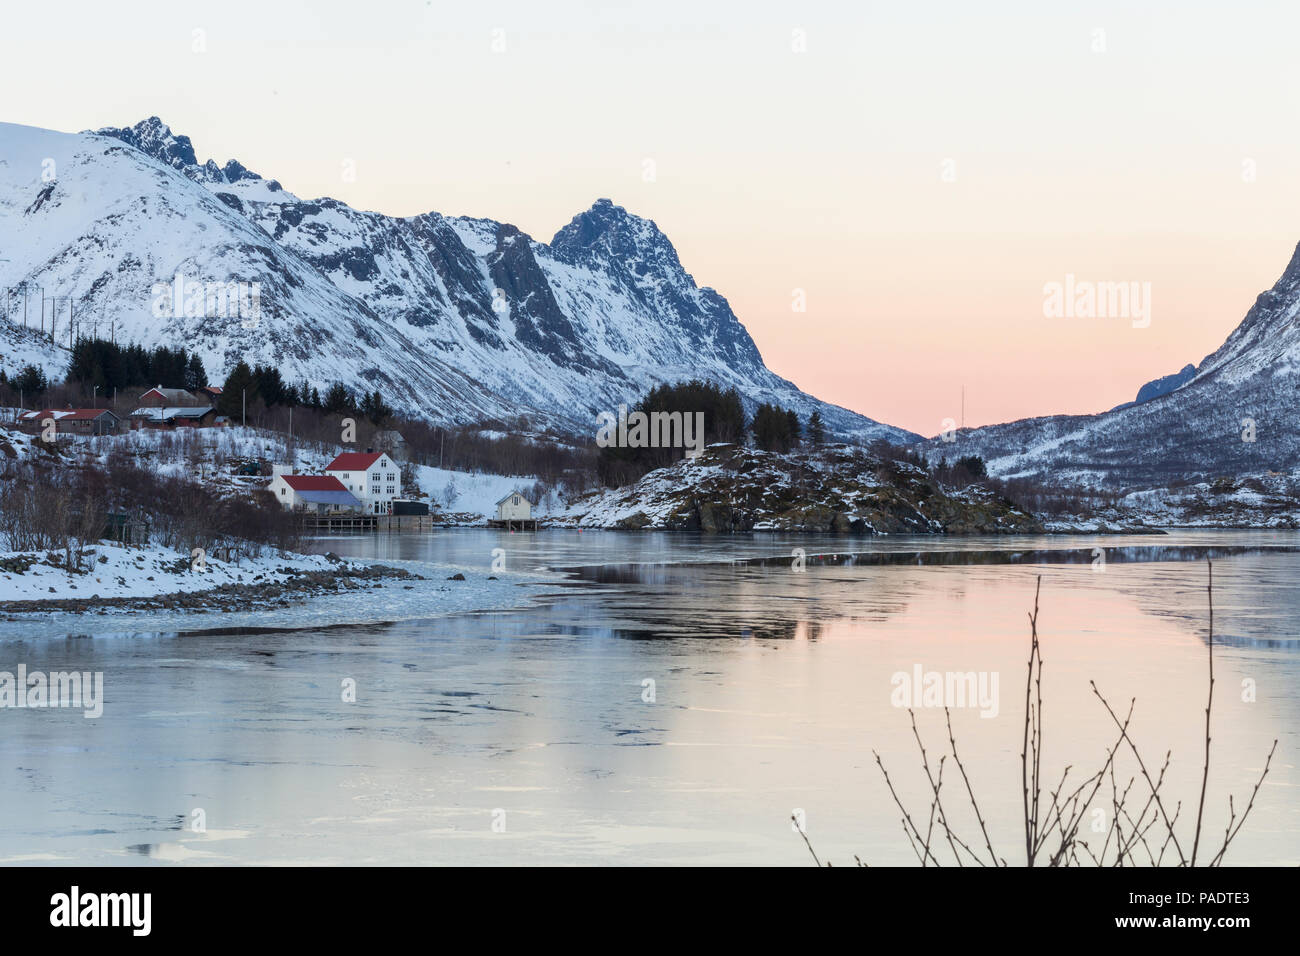 The fjord and mountains surrounding Vestpolloya near Sildpollnes, Nordland, Norway Stock Photo